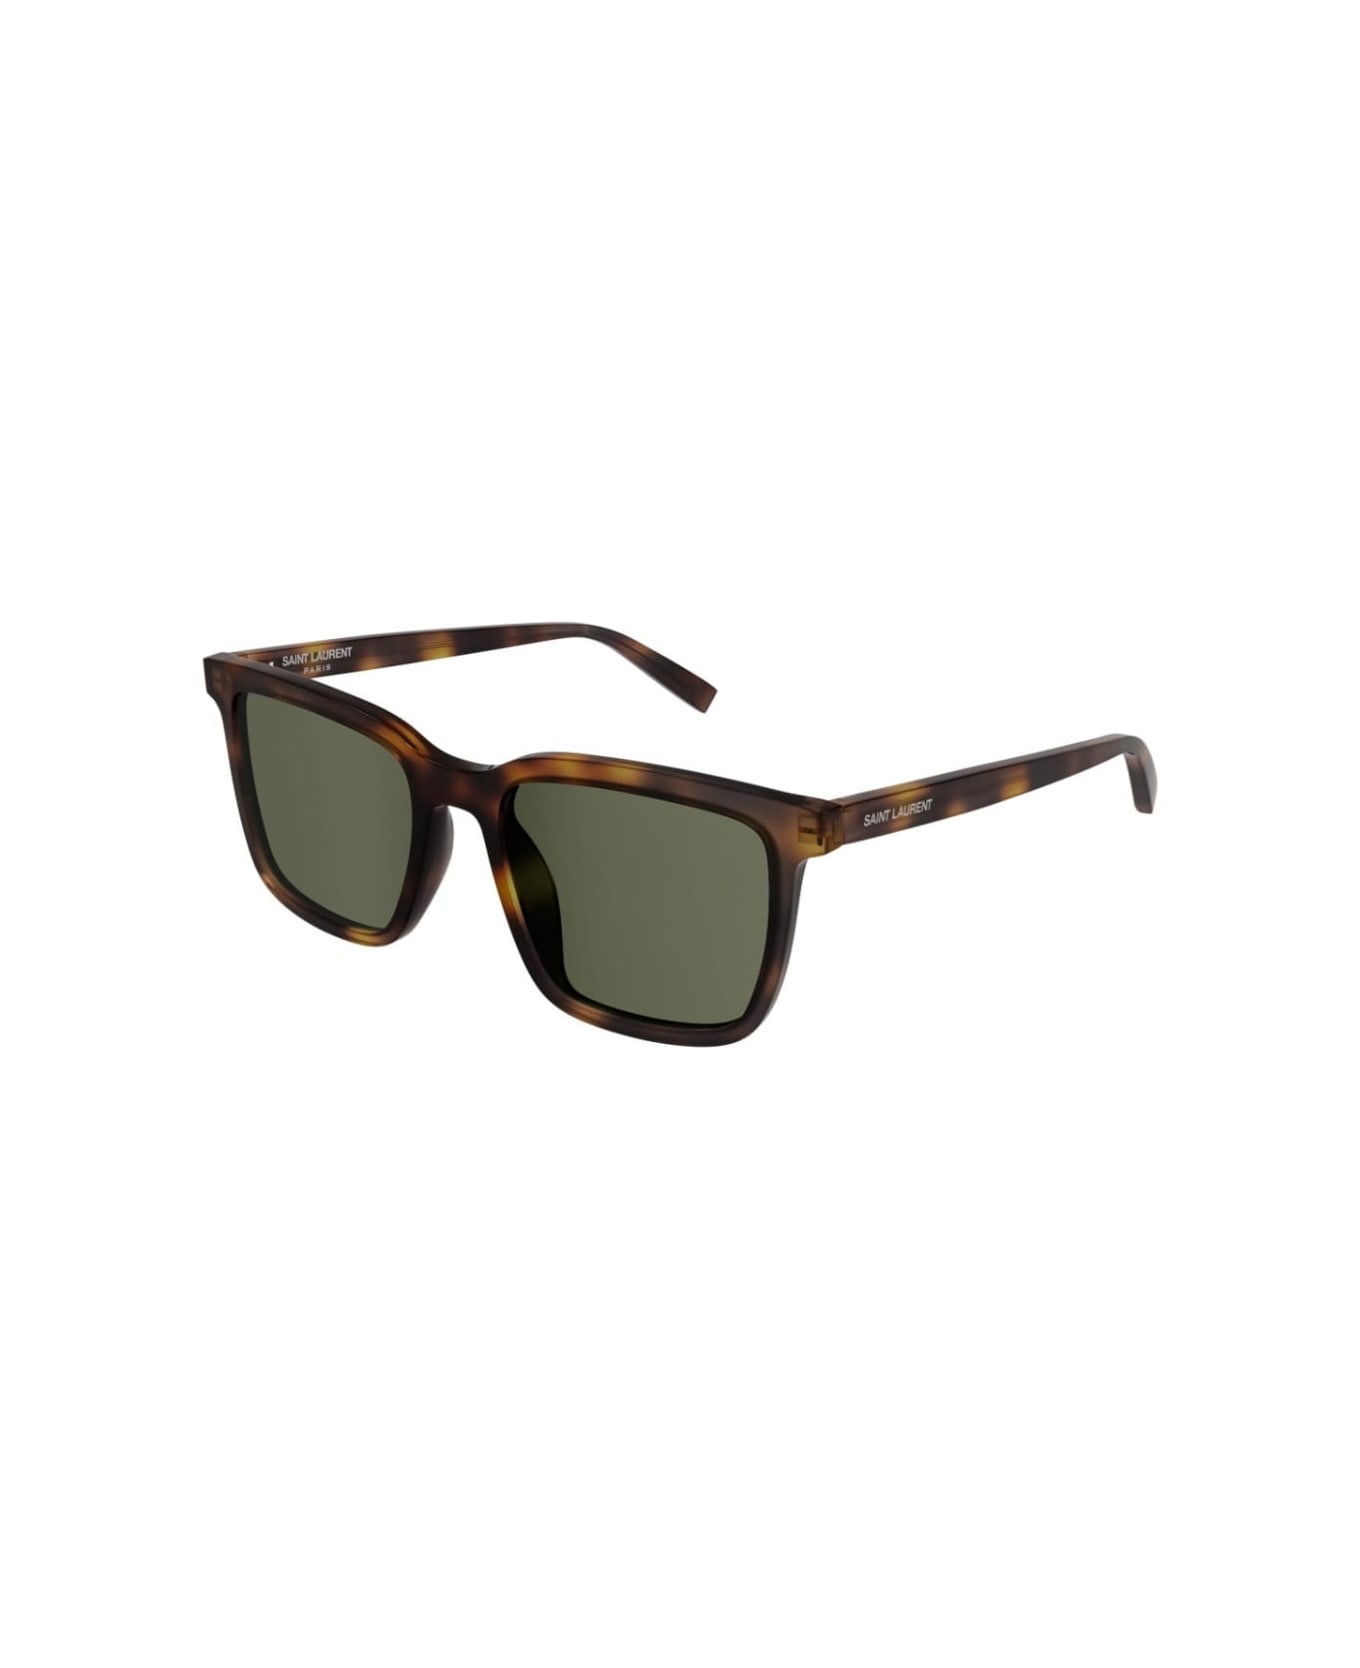 Saint Laurent Eyewear sl 500 003 Sunglasses - Nero e tartarugato